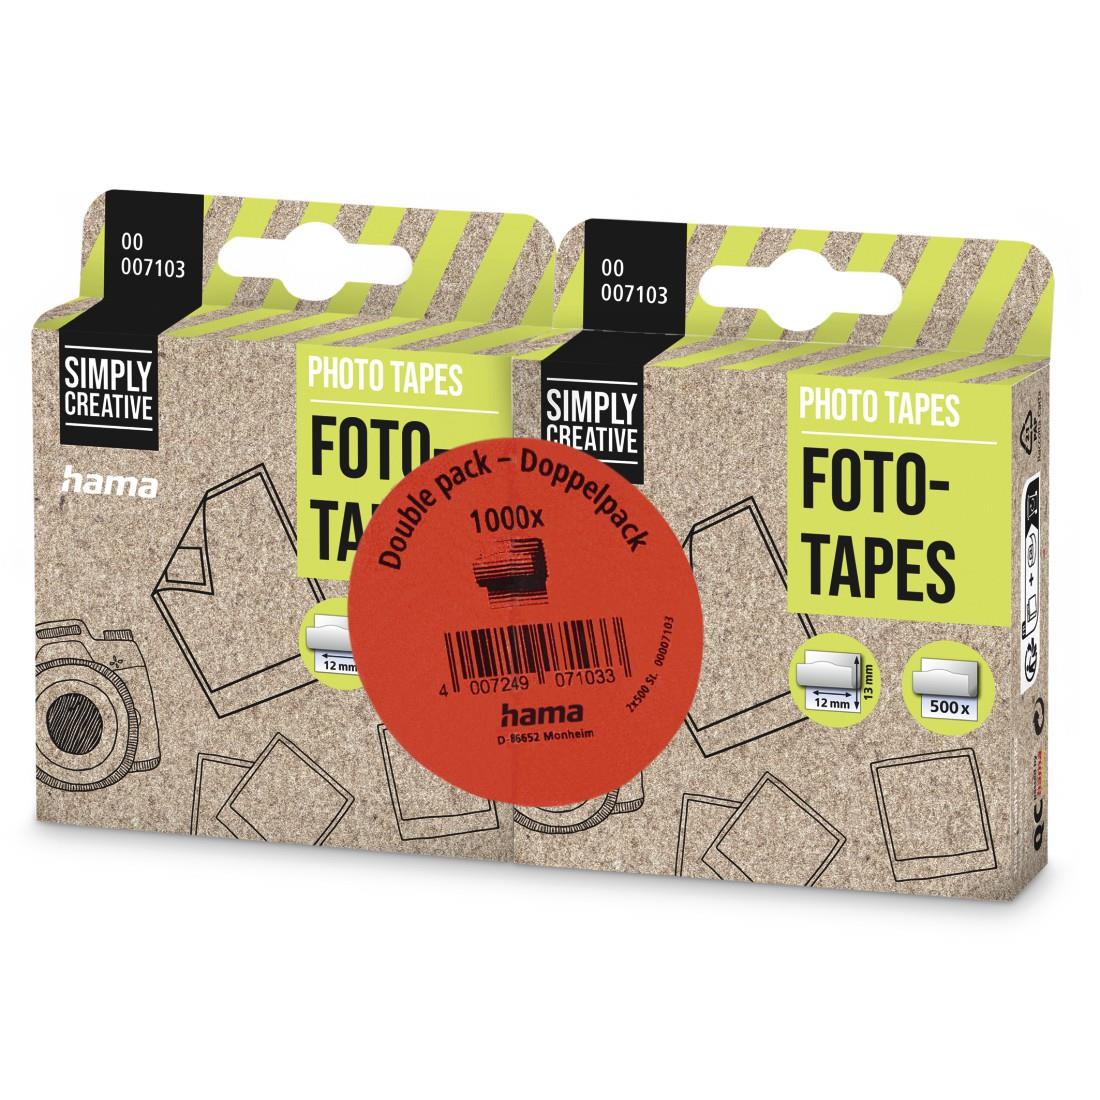 Hama Fototape-Spender, 2x500 Tapes, Doppelpack